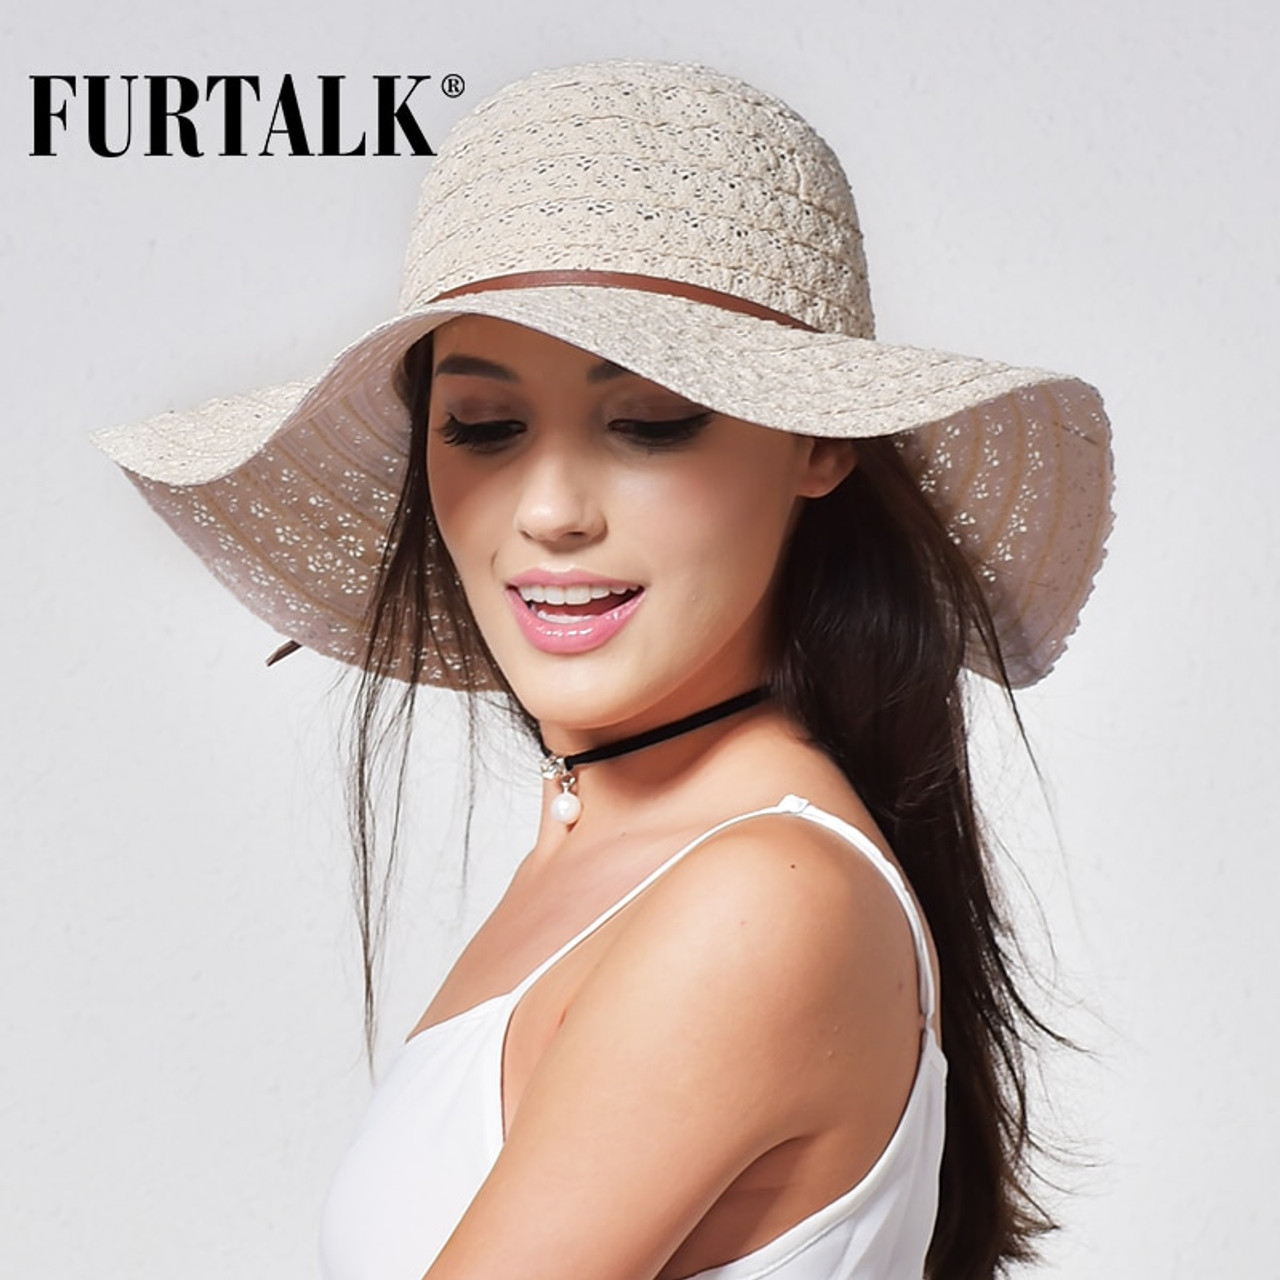 https://cdn11.bigcommerce.com/s-pkla4xn3/images/stencil/1280x1280/products/28202/262677/FURTALK-Summer-Hats-for-Women-Fashion-Design-Women-Beach-Sun-Hat-Foldable-Brimmed-Straw-Hat__46765.1554968542.jpg?c=2